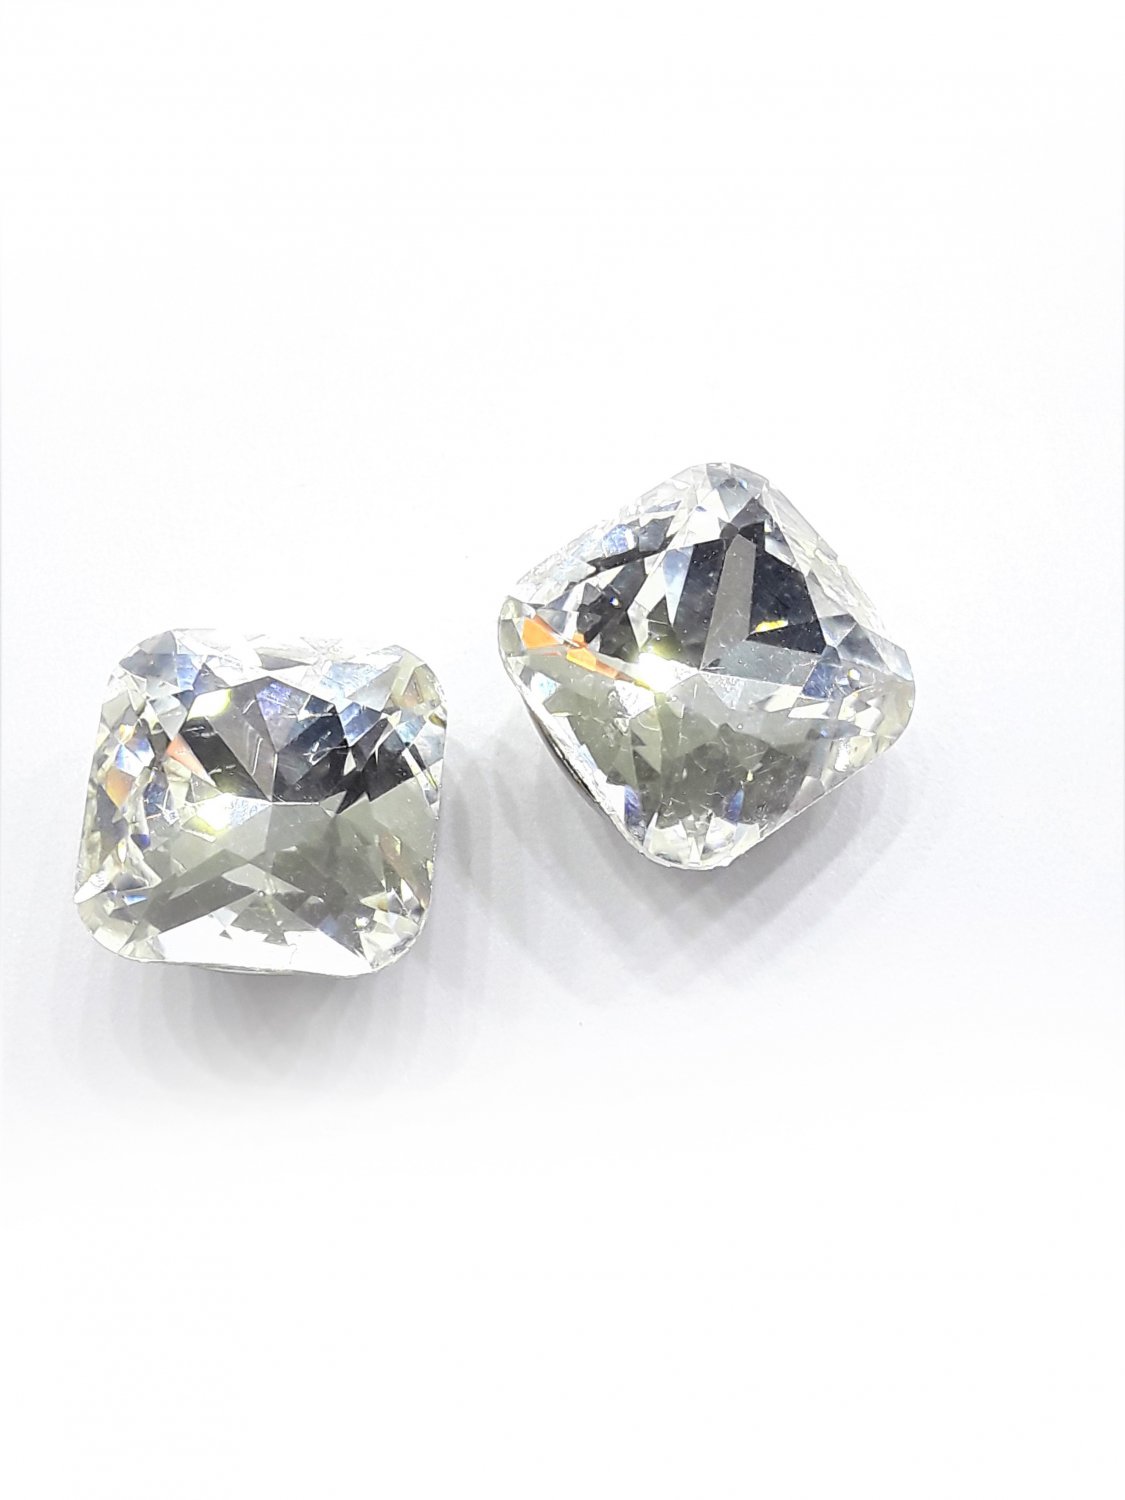 Stud Earrings - Genuine Swarovski Elements - Crystal - Extreme Sparkle ...